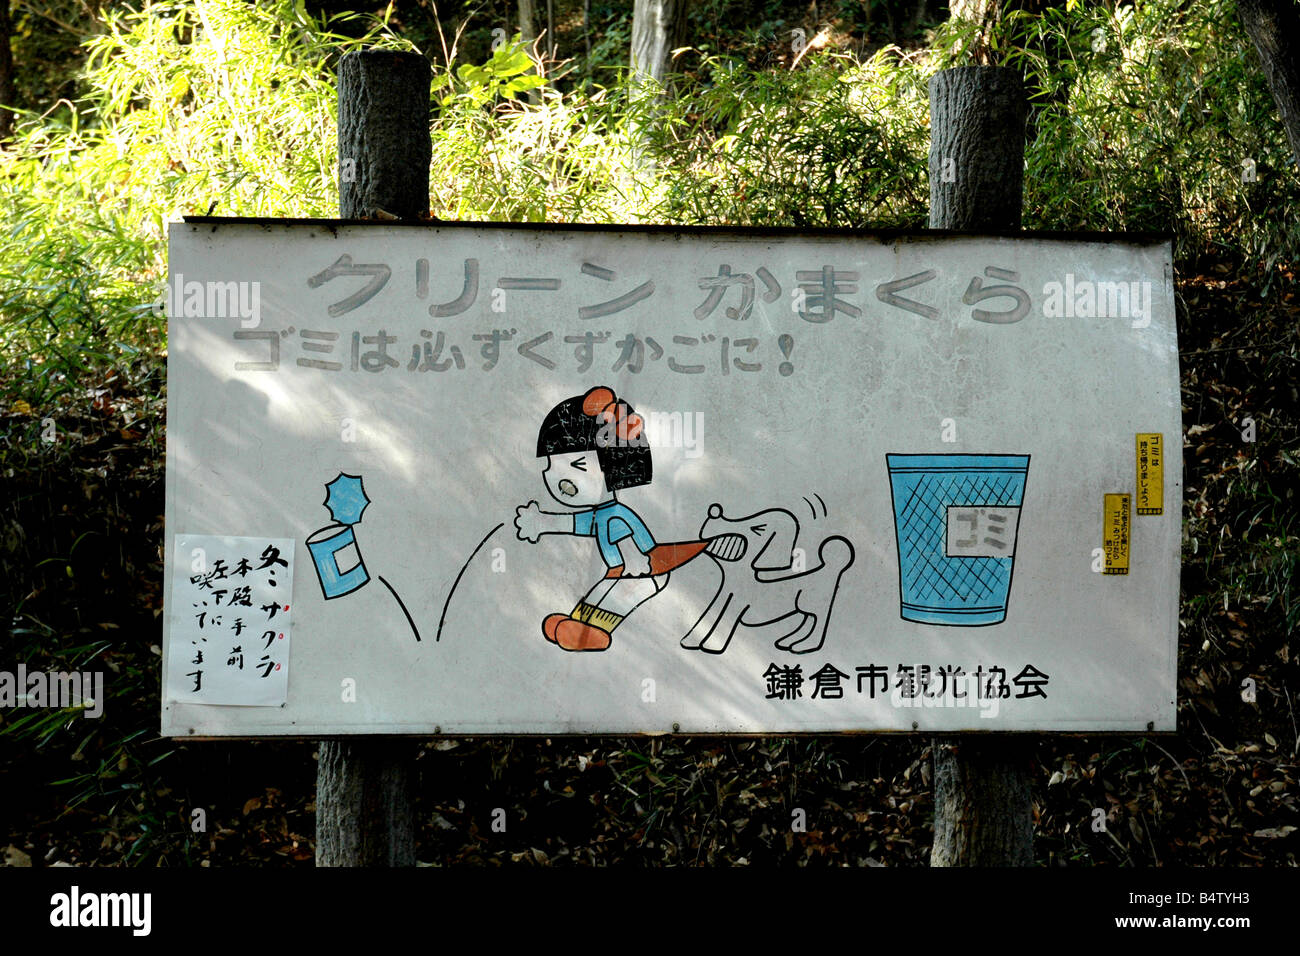 'Don't drop litter' sign, Japan Stock Photo